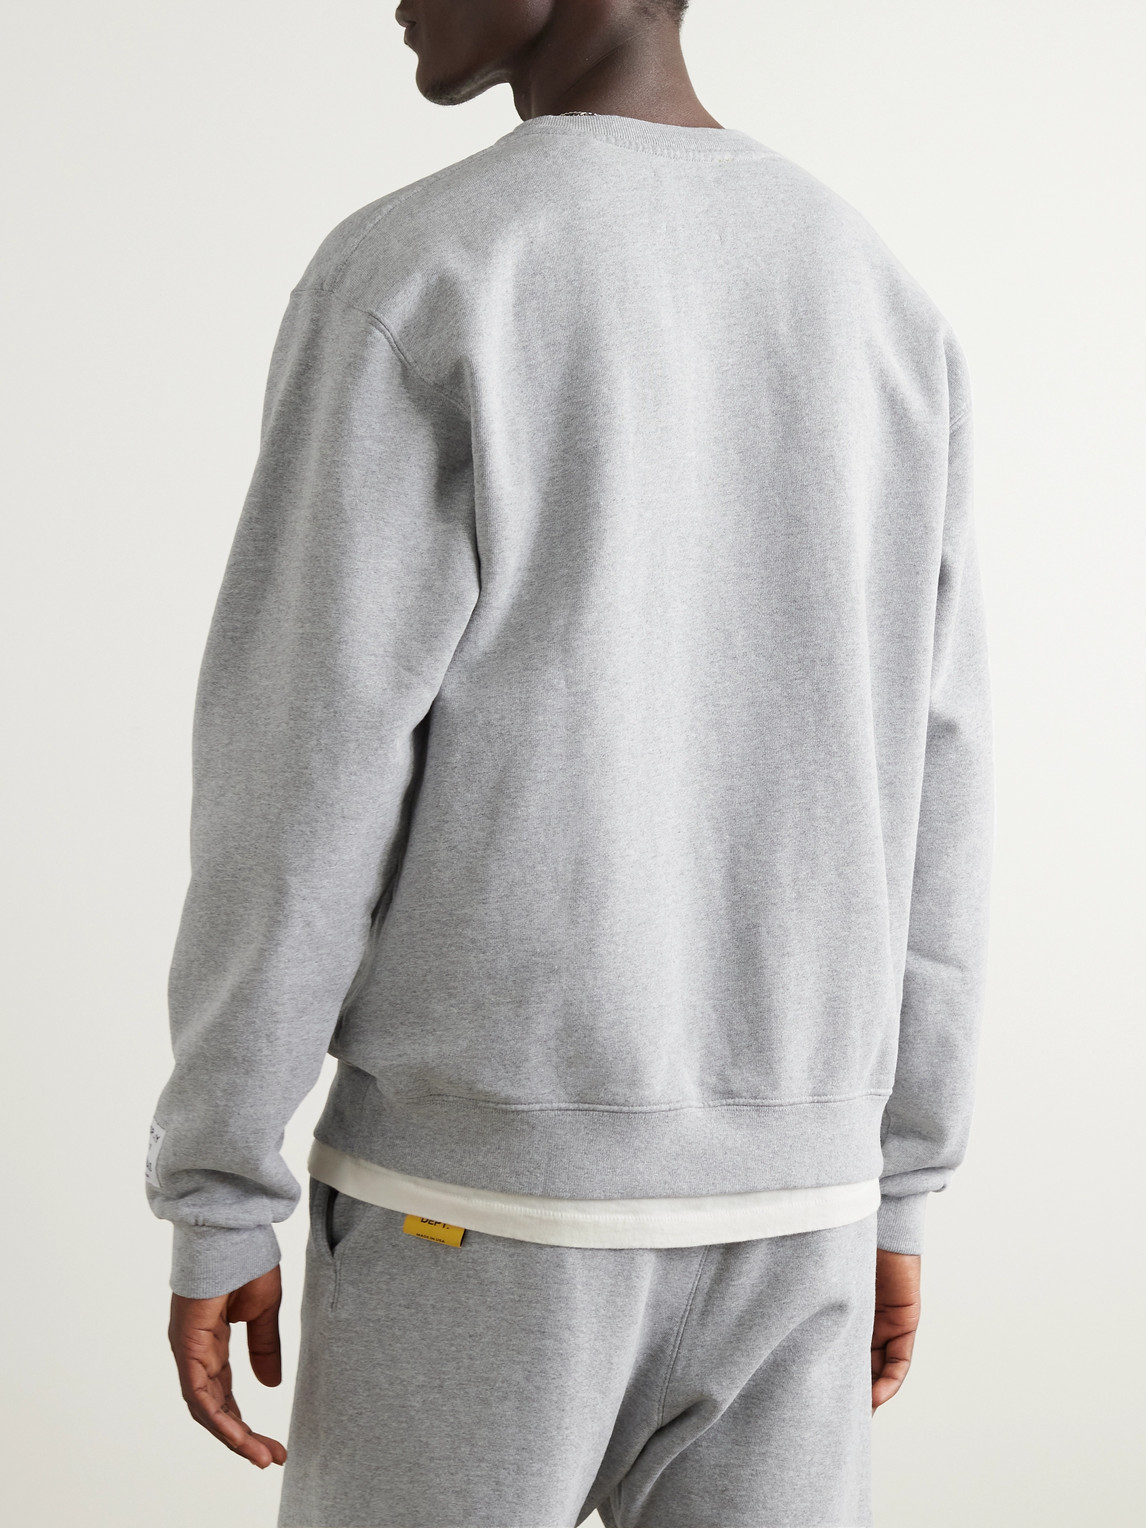 Shop Gallery Dept. Logo-print Cotton-jersey Sweatshirt In Gray